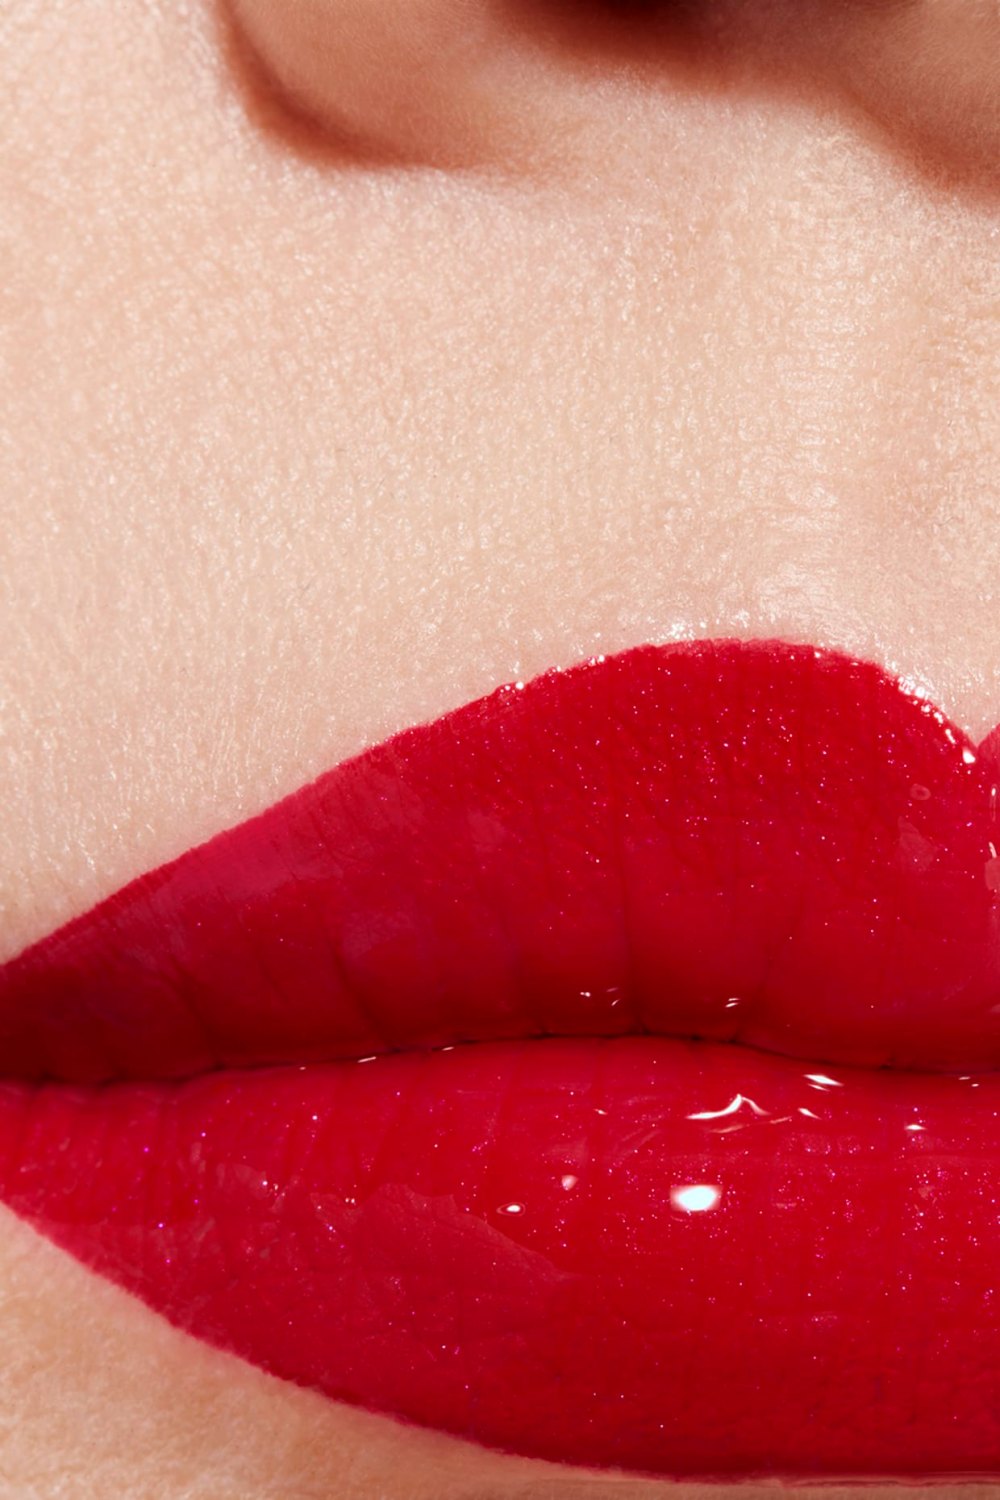 red chanel lipstick